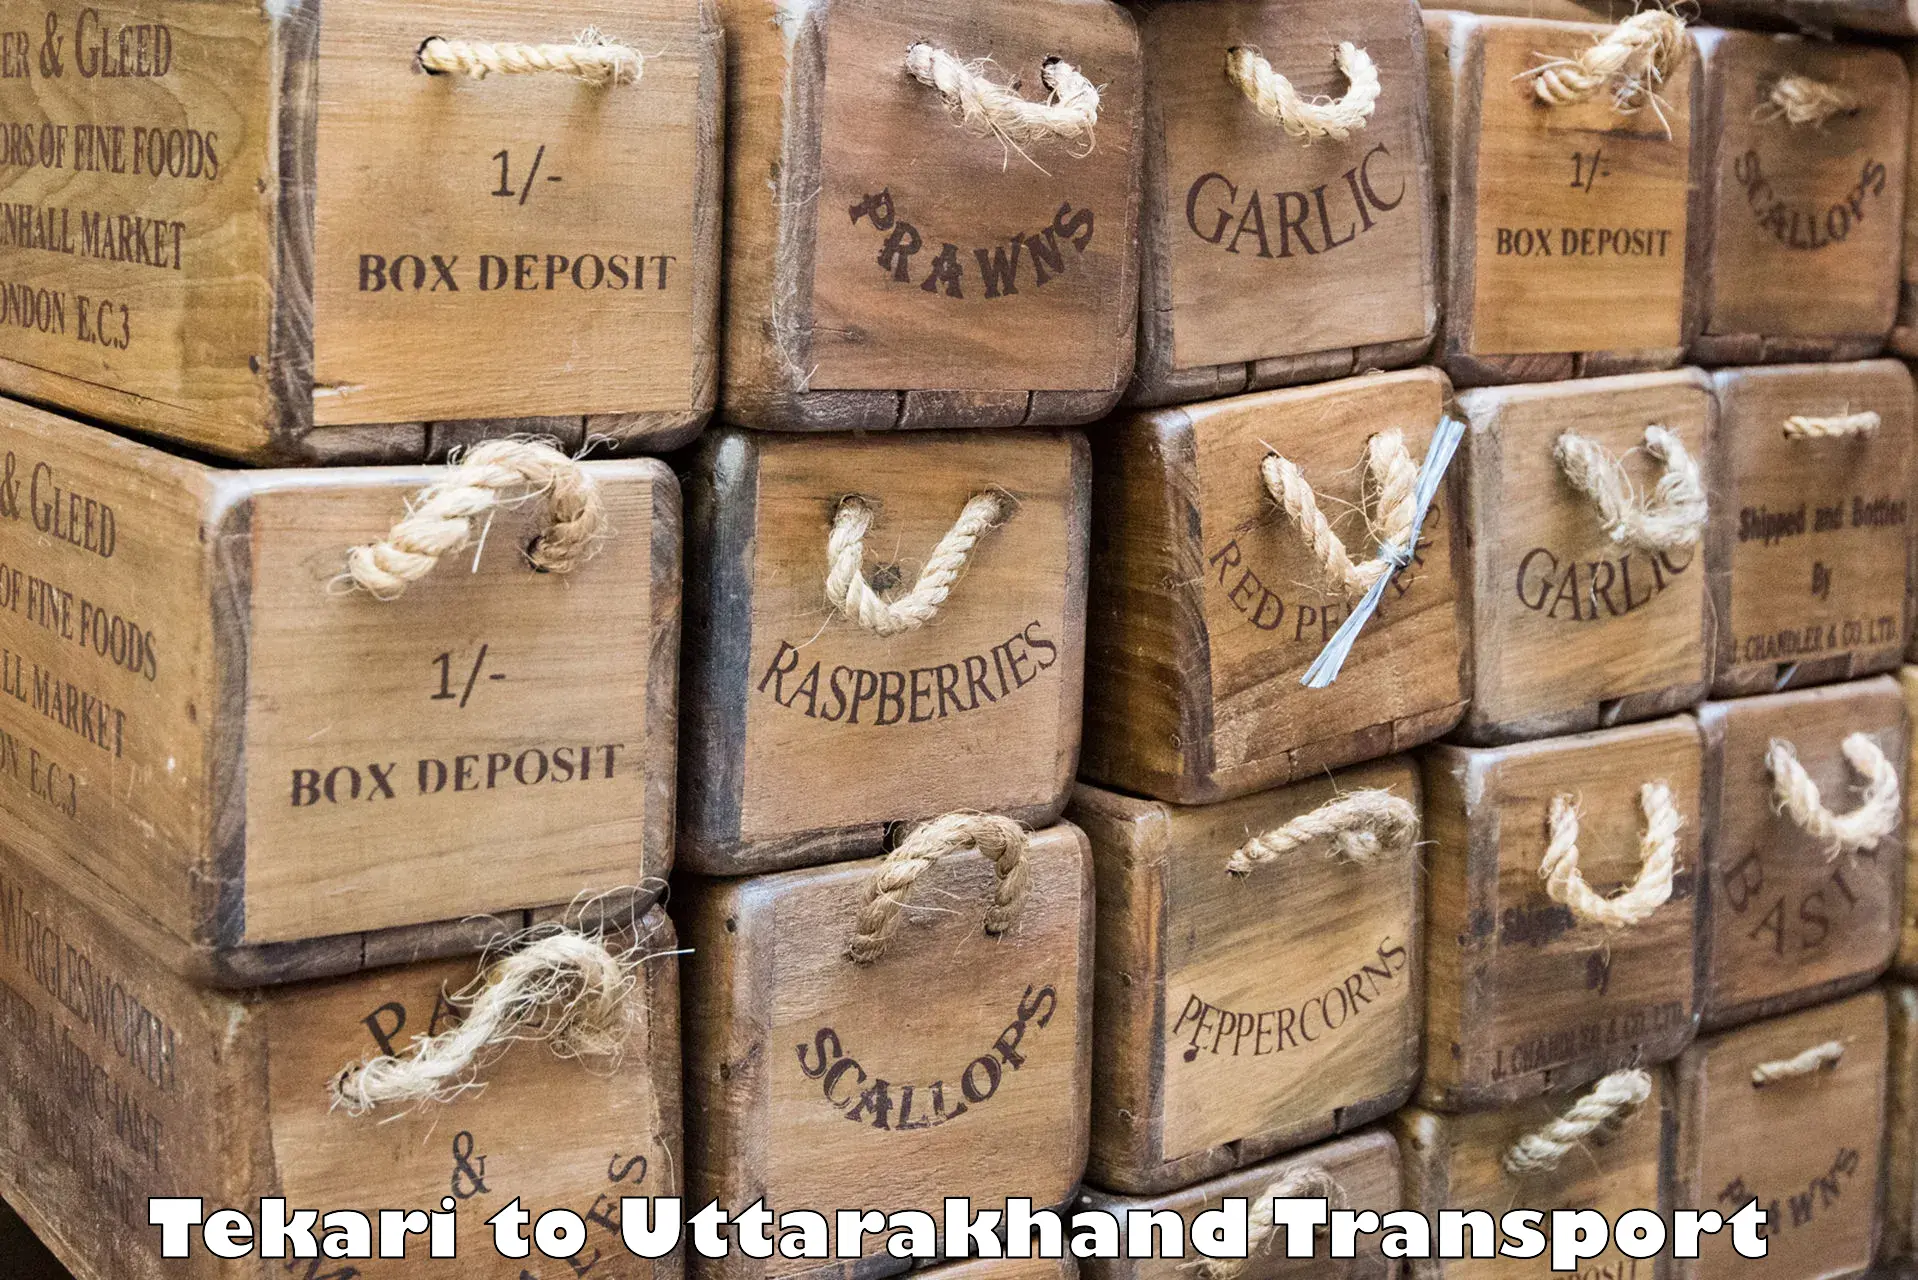 Container transport service Tekari to Rishikesh